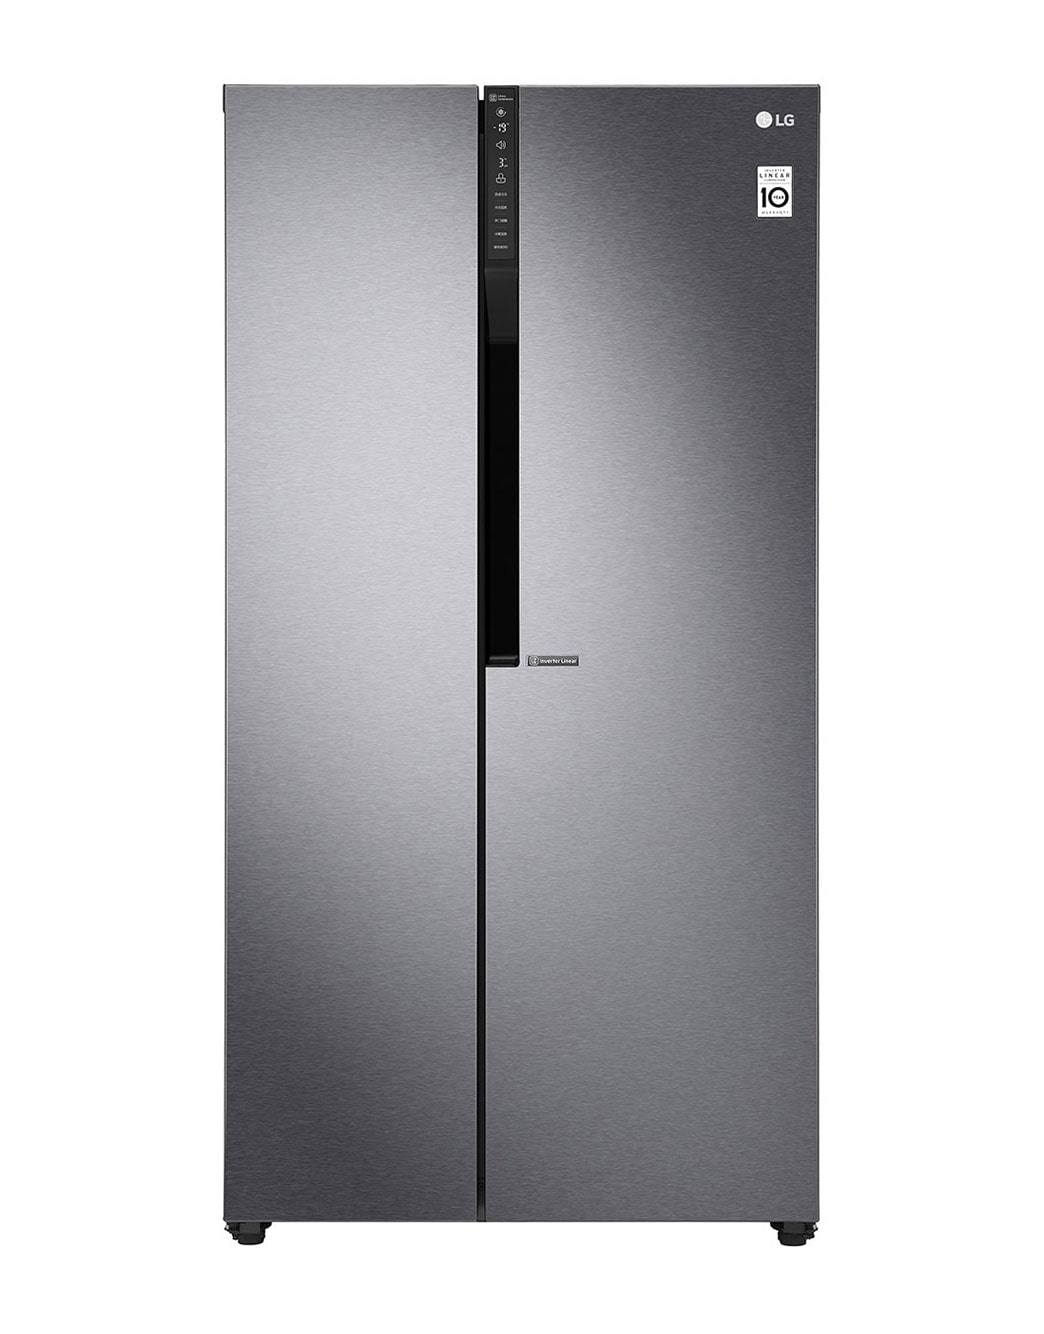 LG side-by-side refrigerators